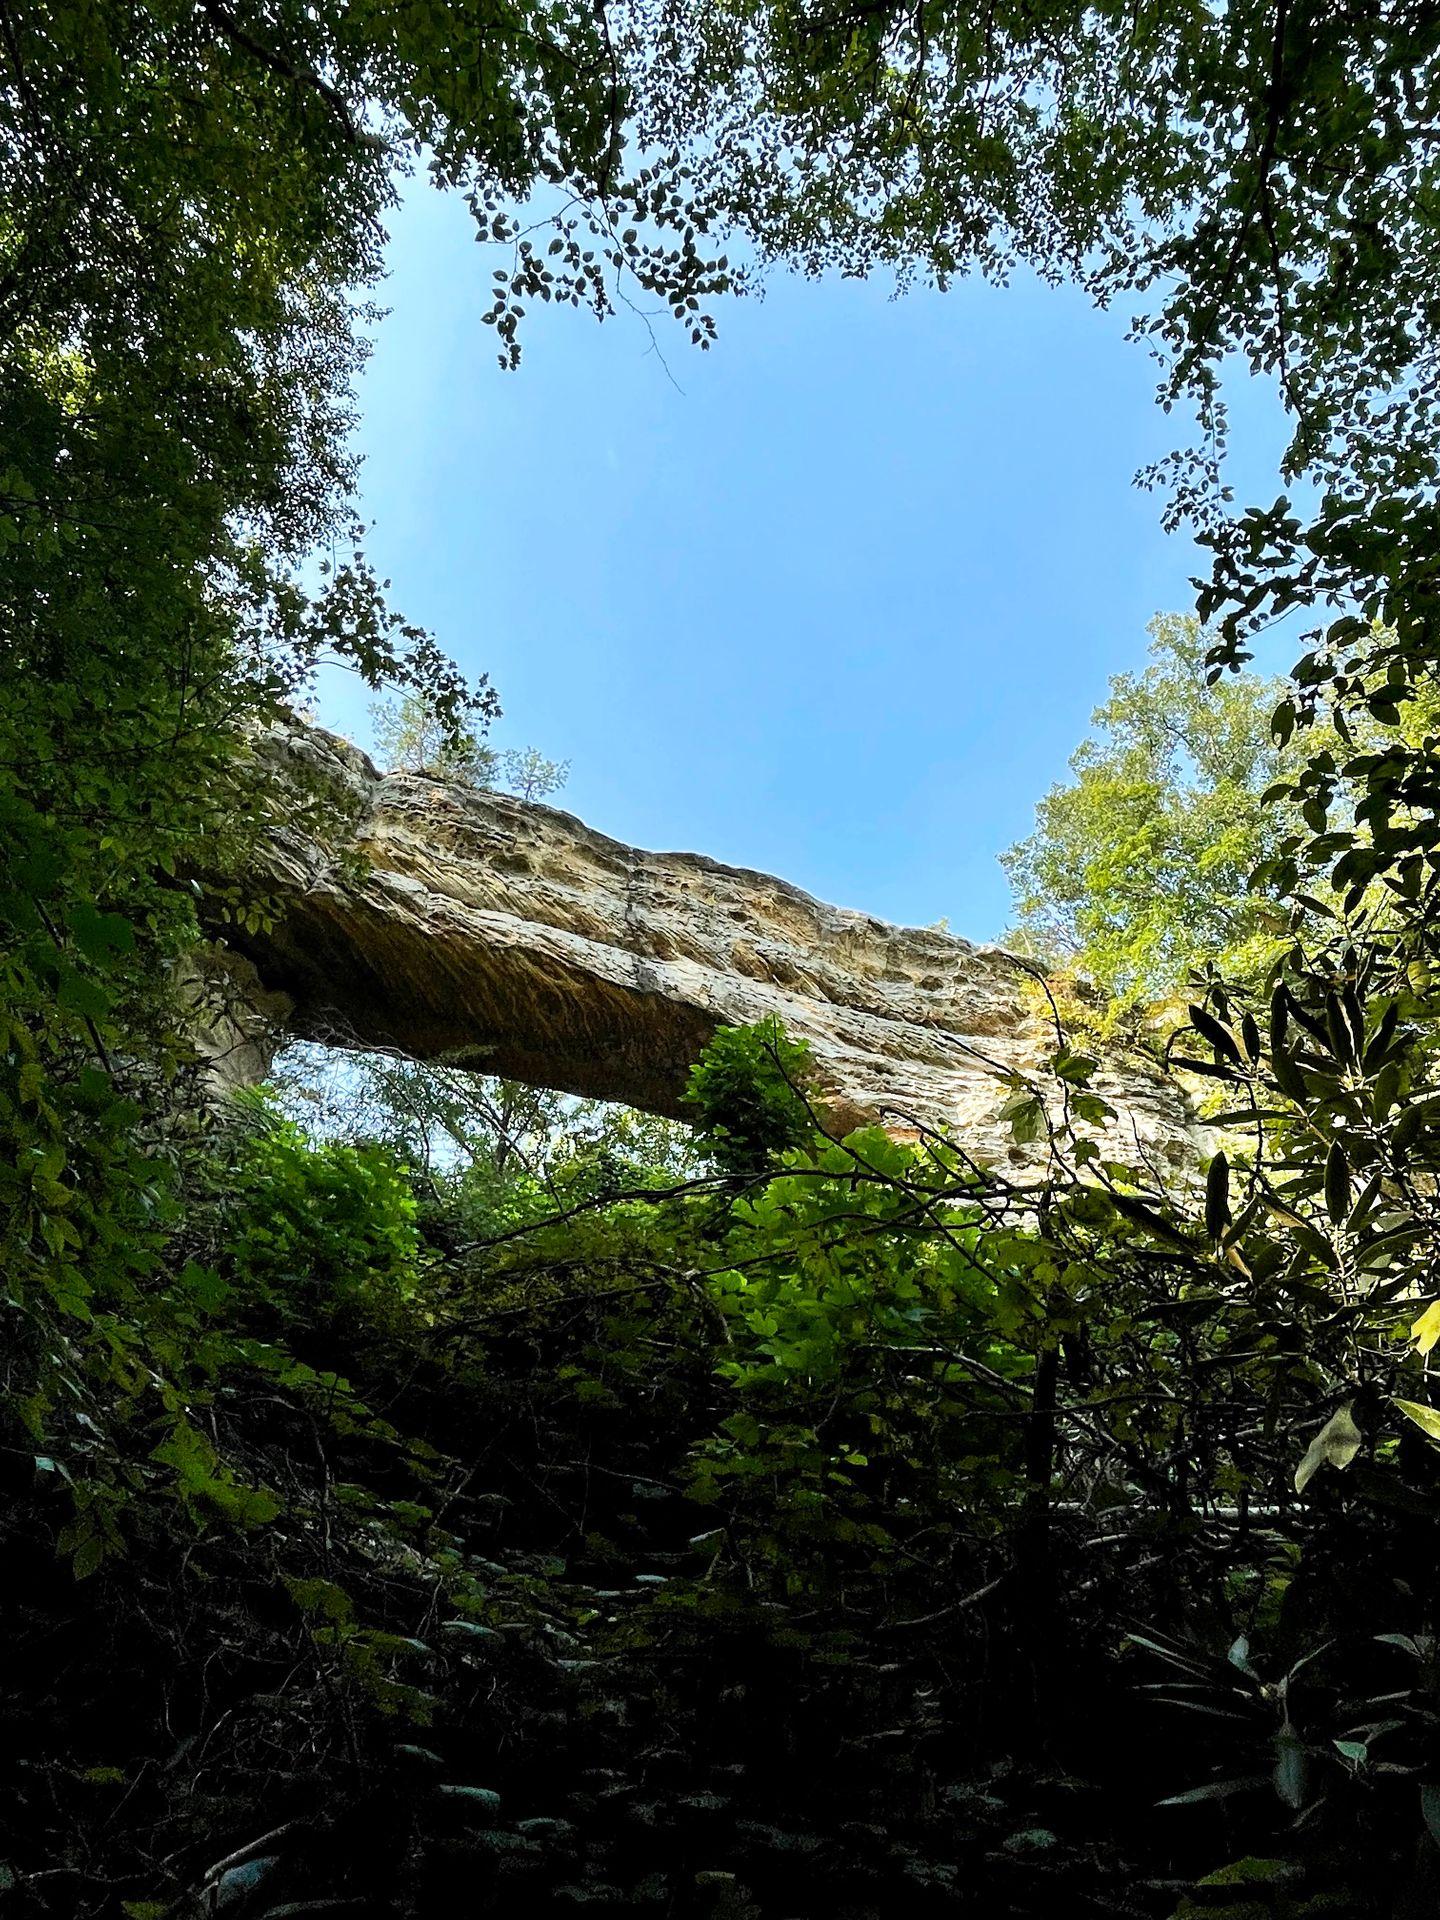 A rock bridge through trees.